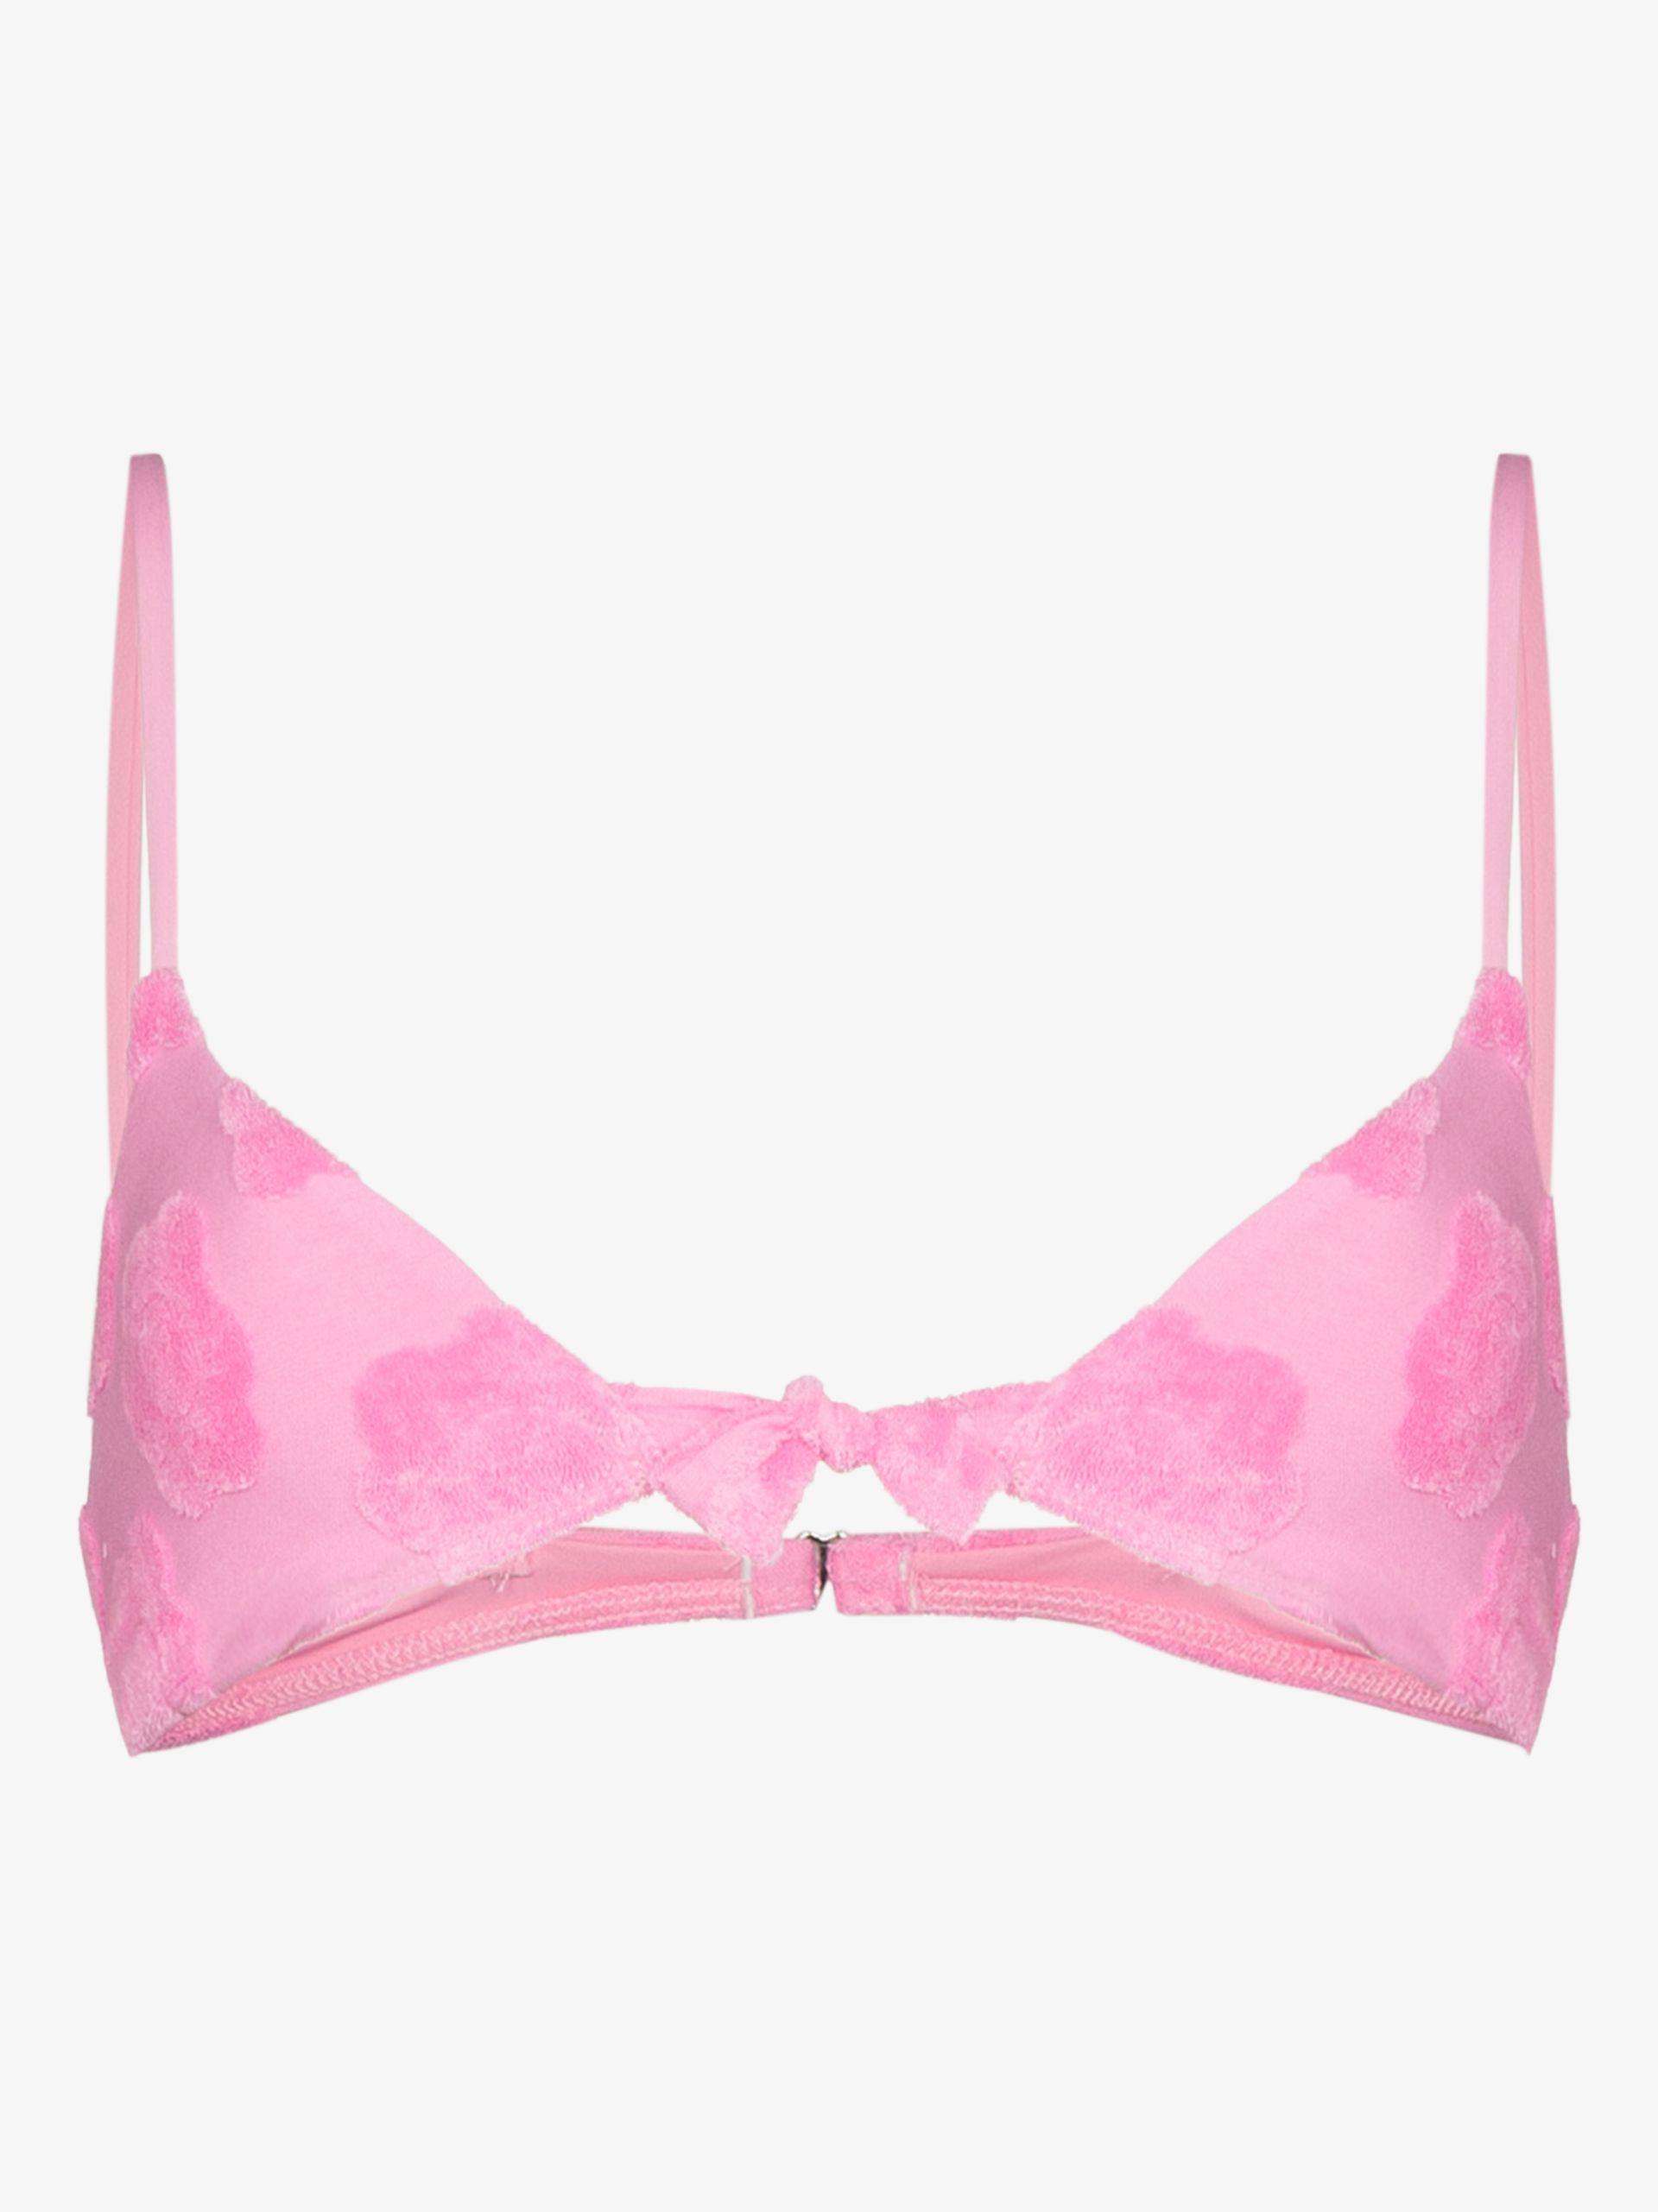 Frankie's Bikinis Cotton Wonderland Floral Terry Bikini Top in Pink - Lyst